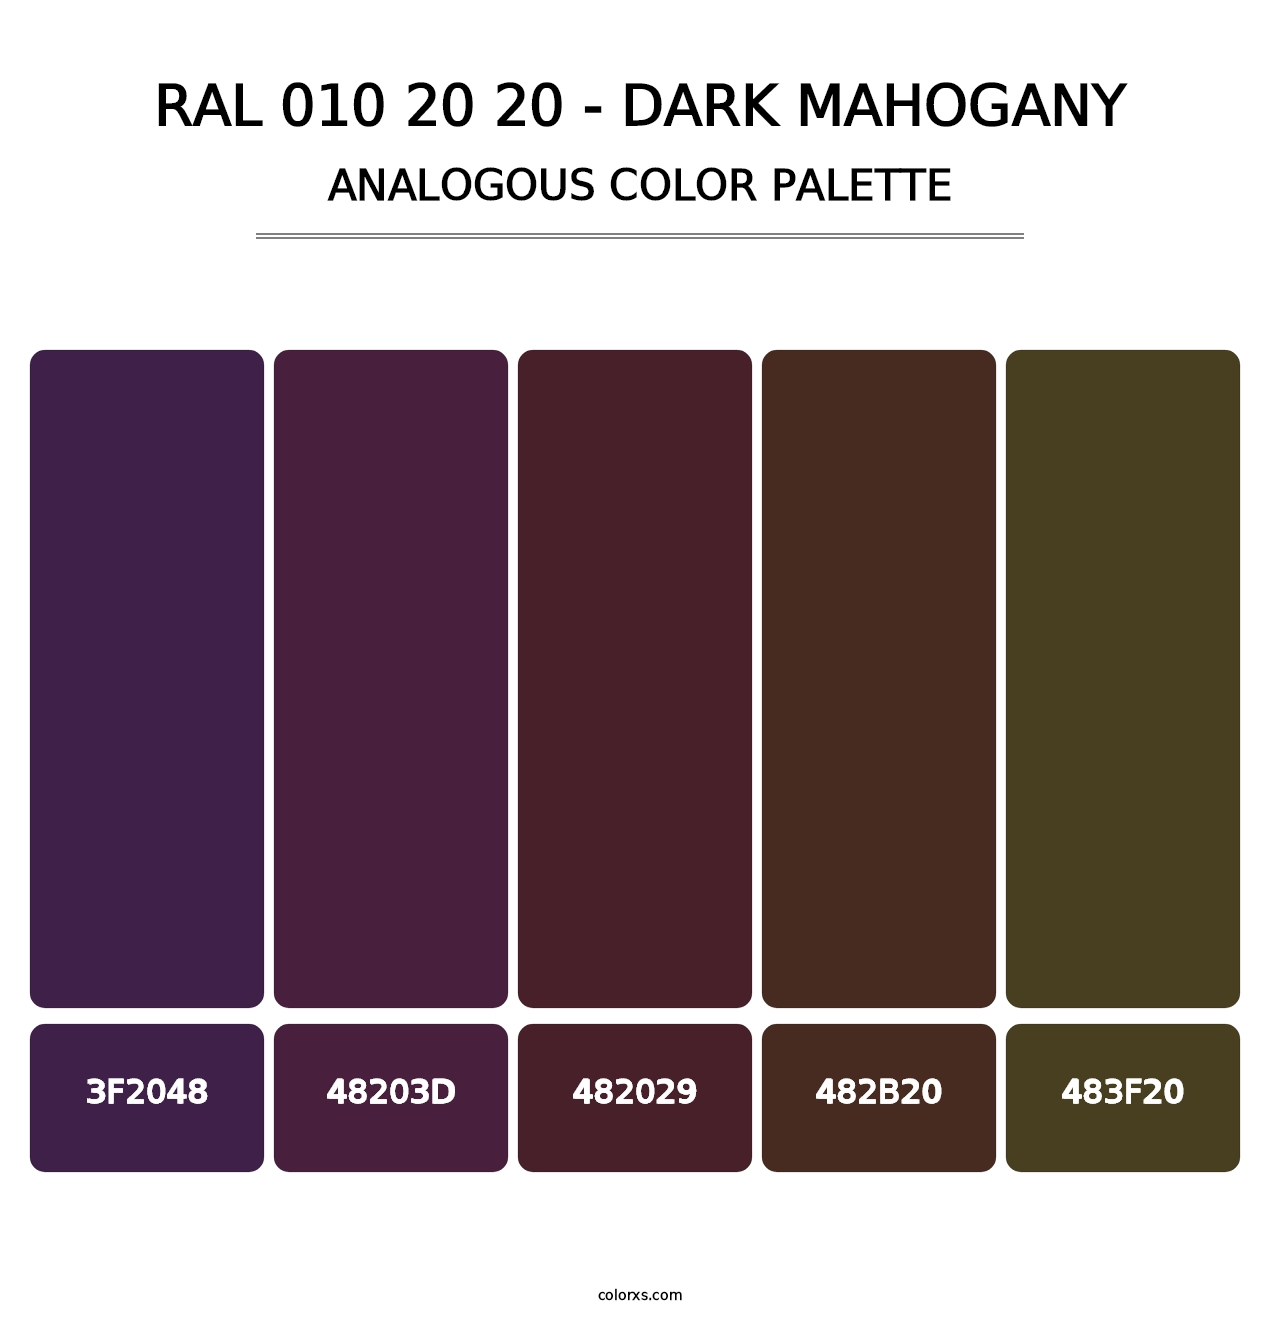 RAL 010 20 20 - Dark Mahogany - Analogous Color Palette